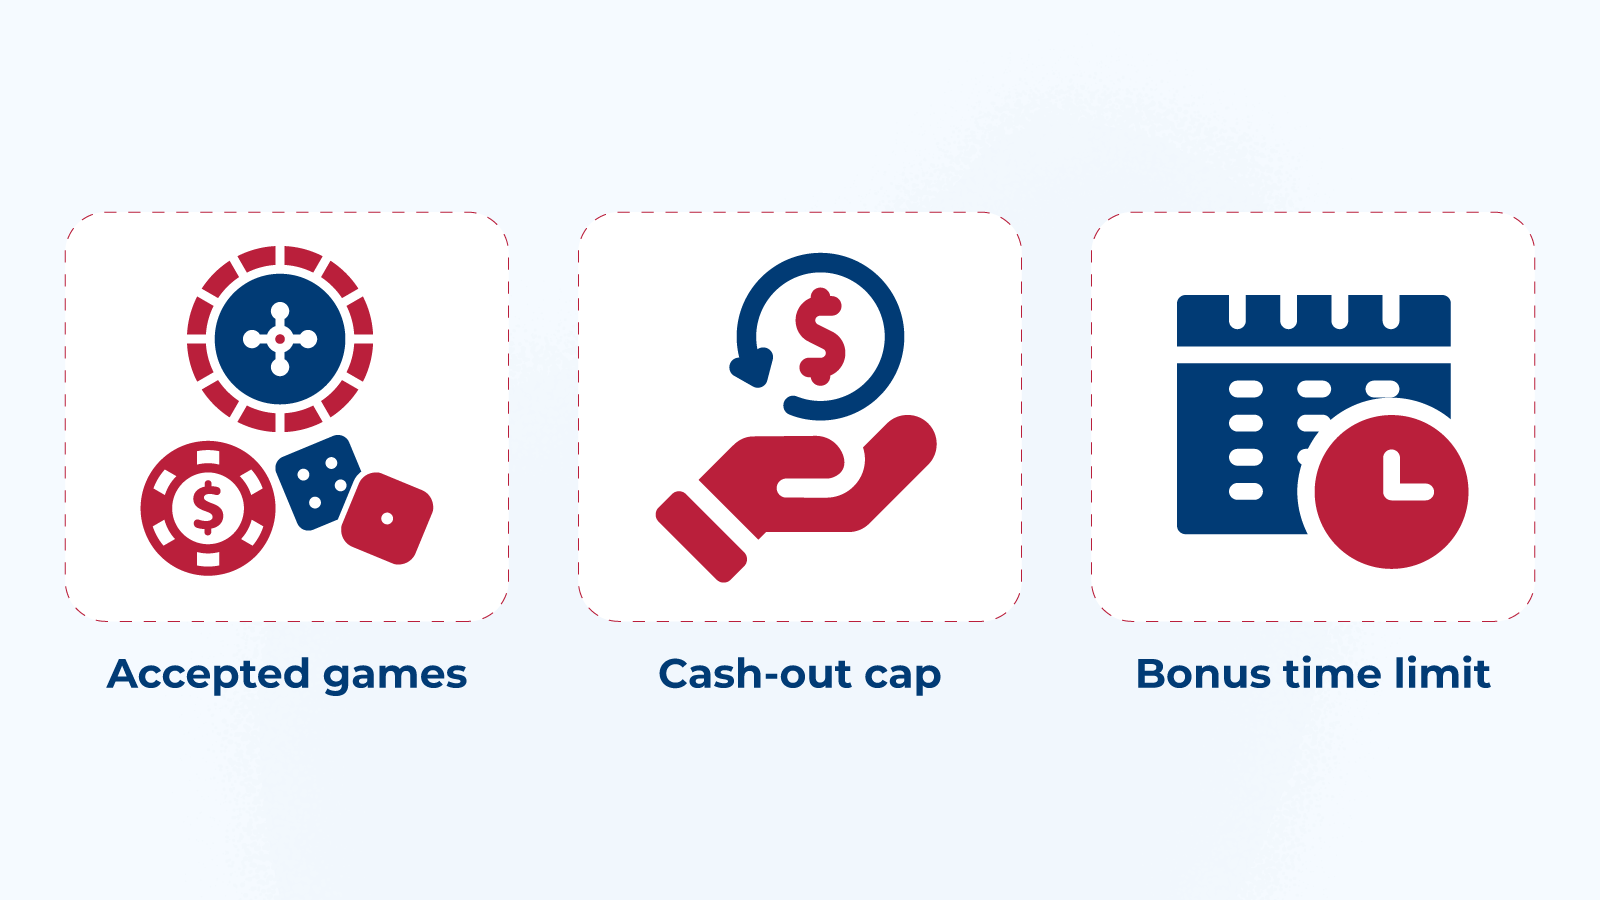 The specifics of 400% casino bonuses